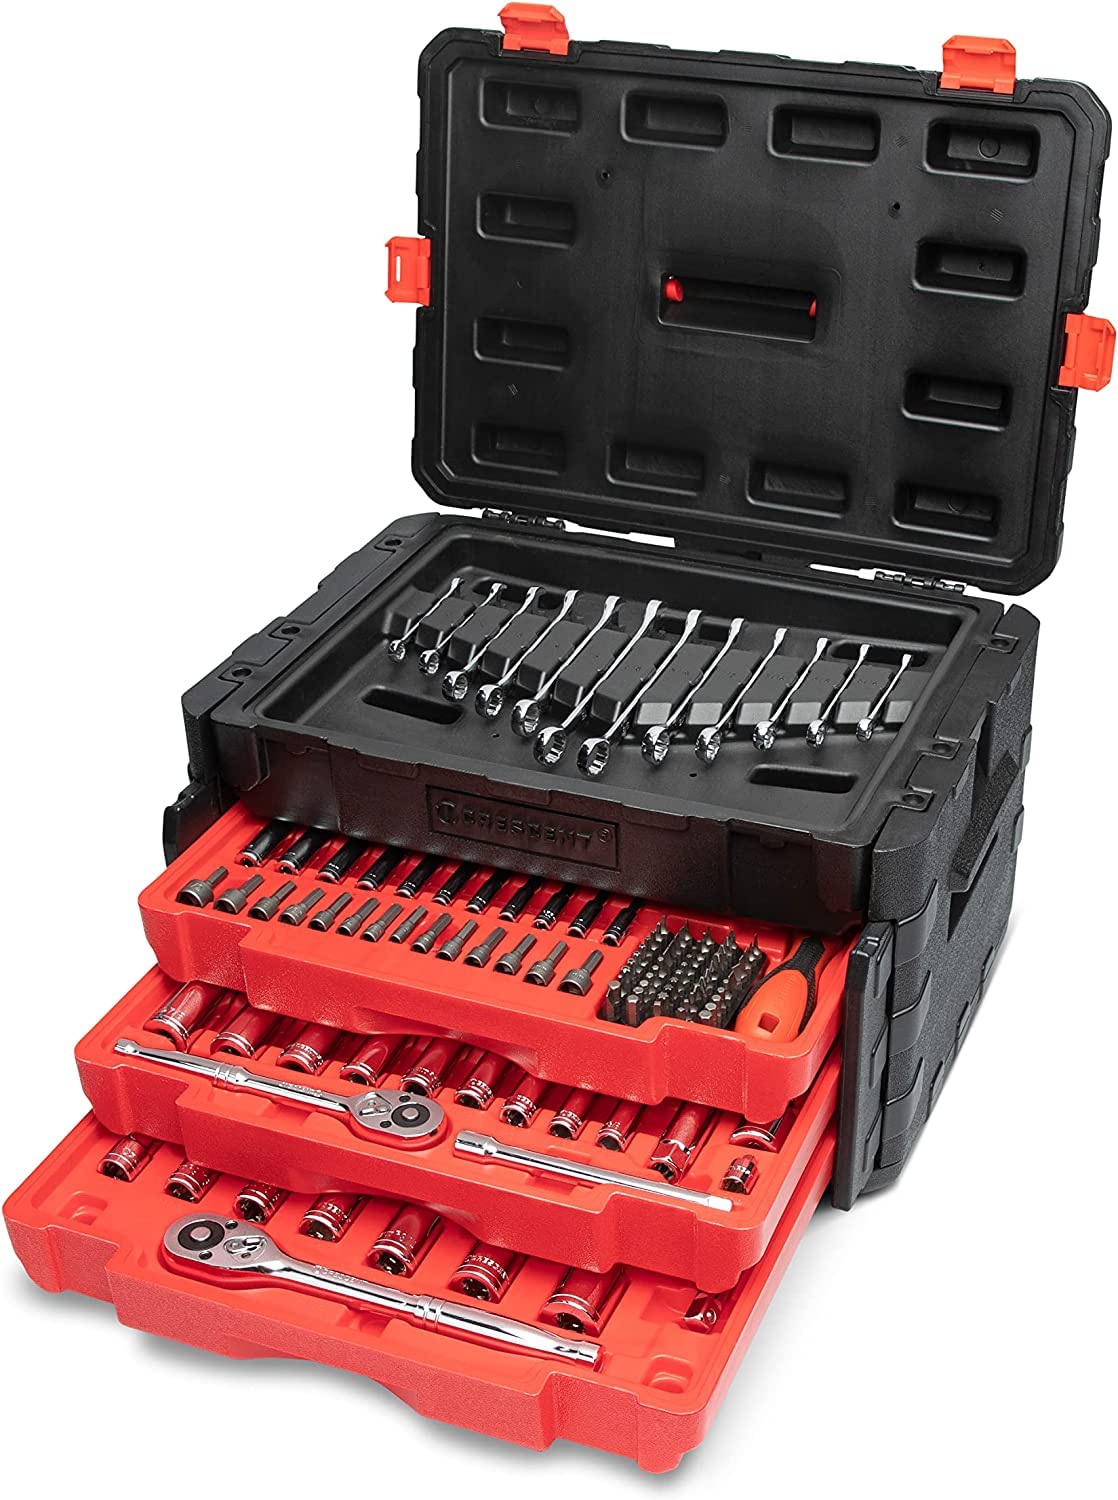 229 Piece 1/4", 3/8" & 1/2" Drive Mechanics Hand Tool Set with 3 Drawer Storage Case